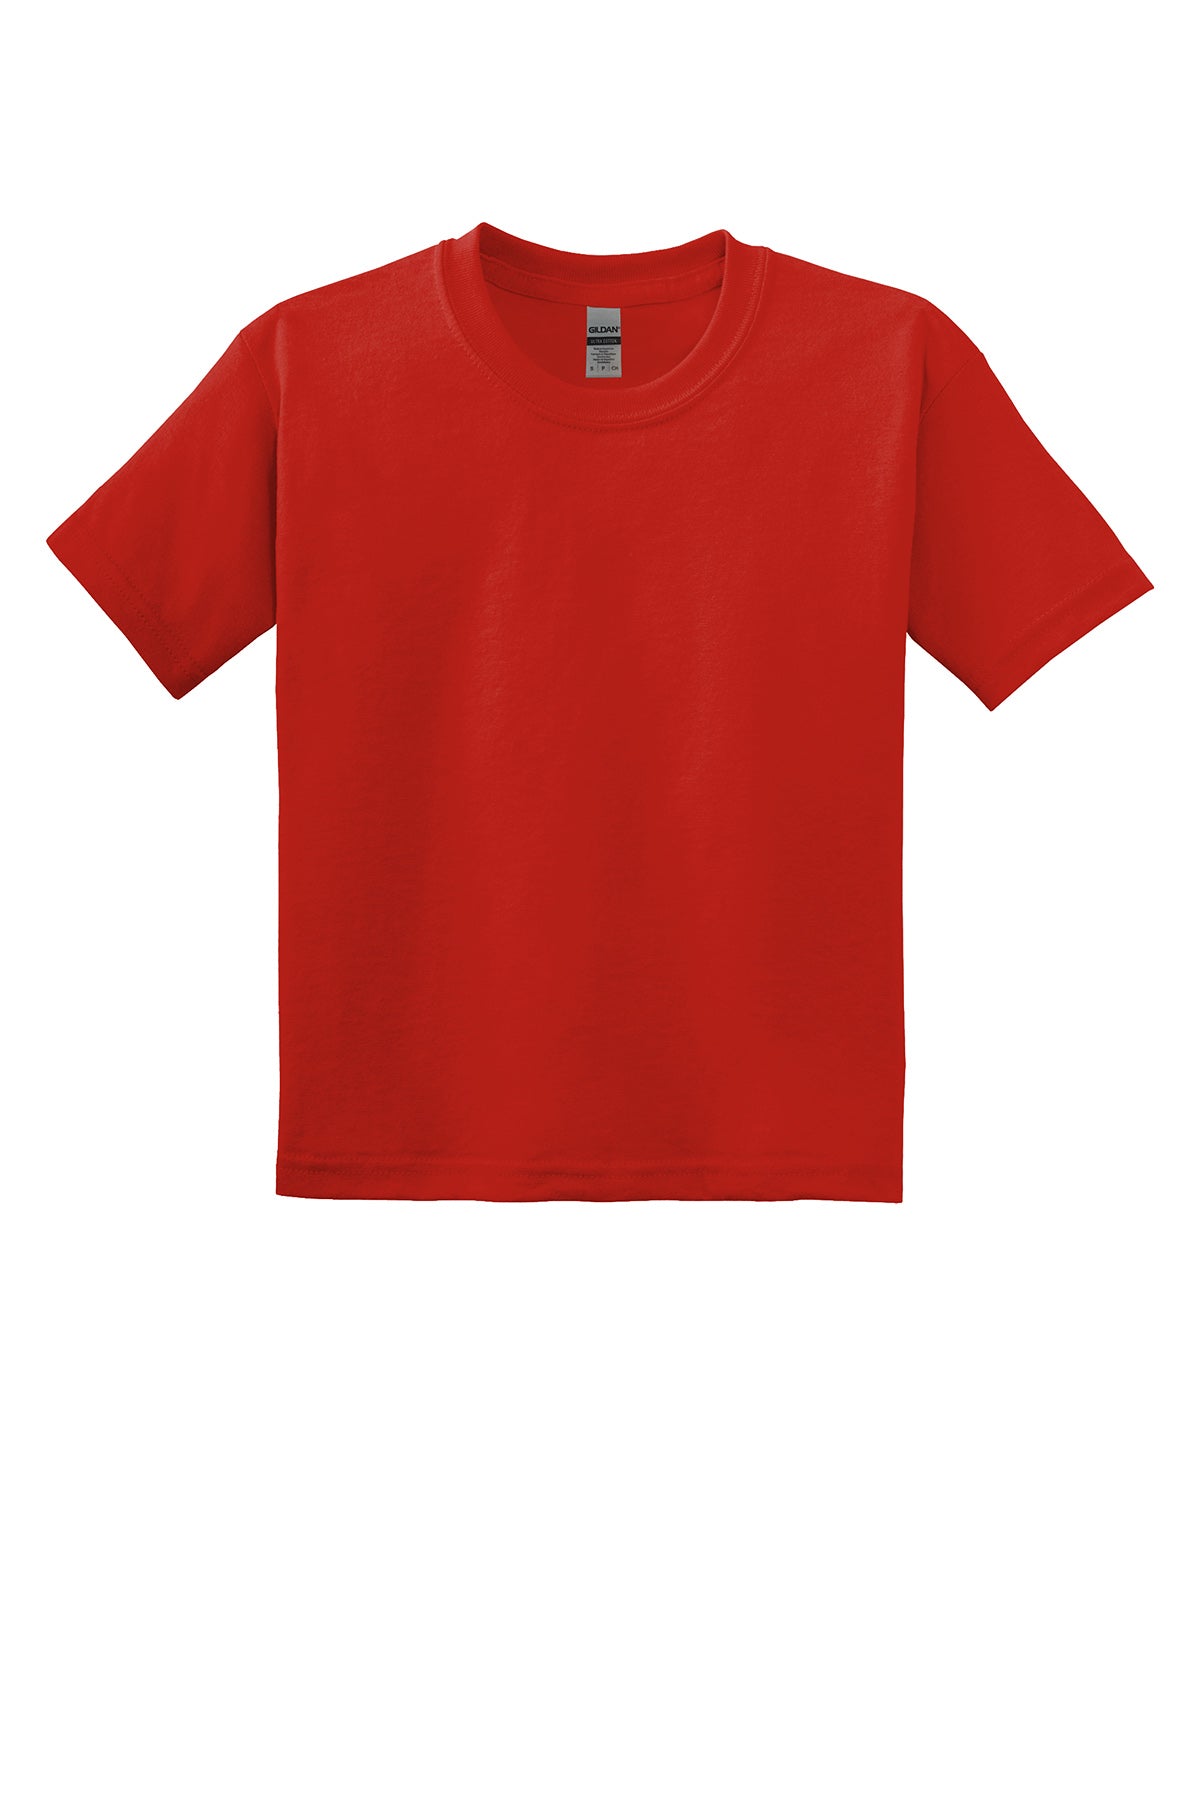 Gildan 8000B Youth Dryblend T-Shirt Yth Small / Red